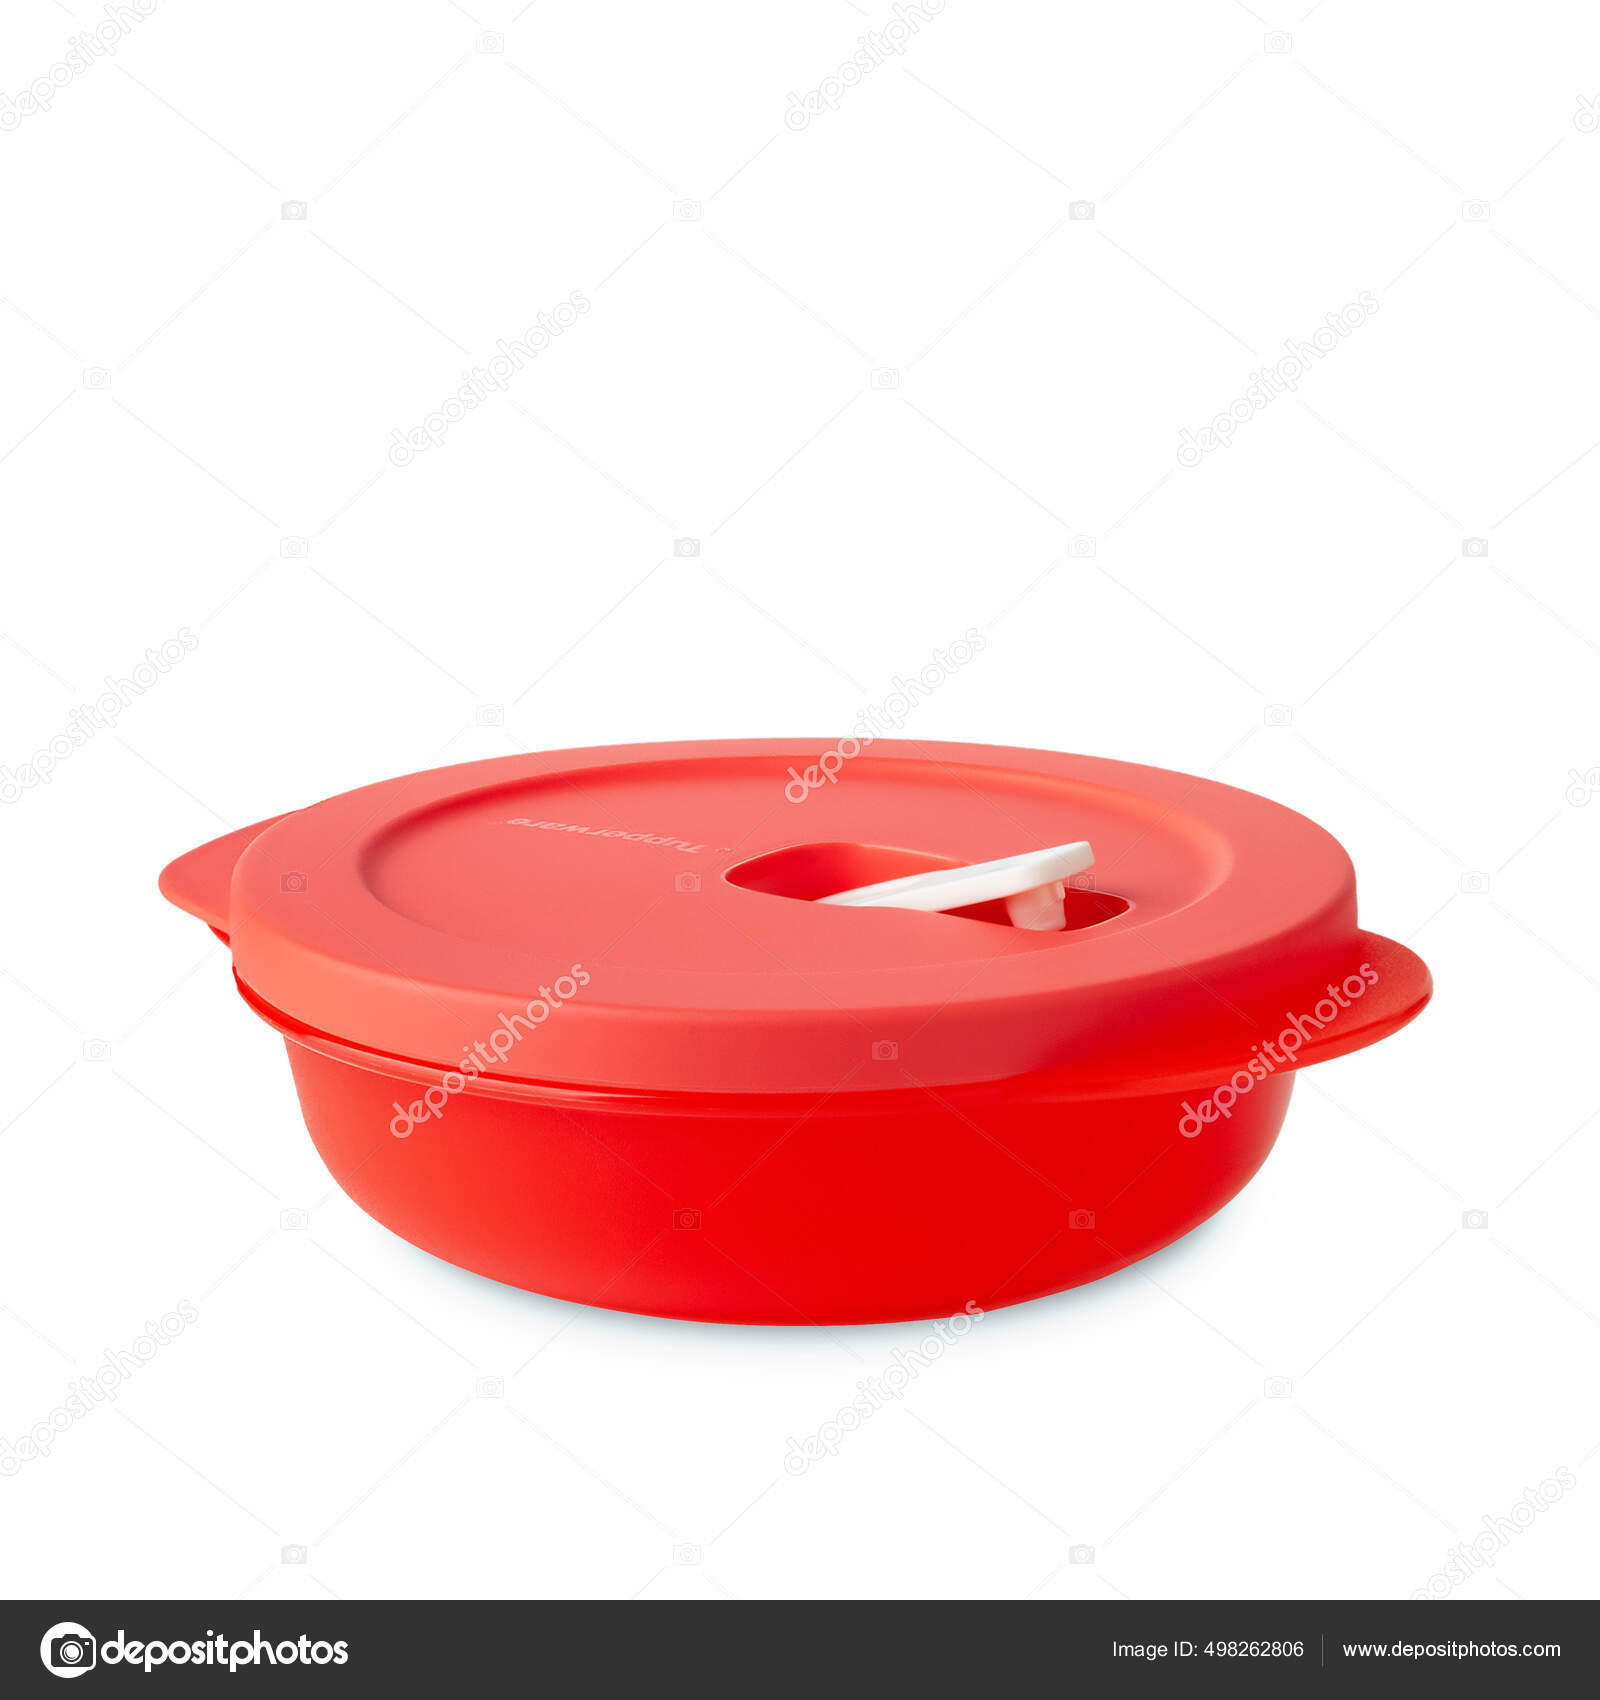 https://st2.depositphotos.com/17433220/49826/i/1600/depositphotos_498262806-stock-photo-tupperware-plastic-container-plastic-red.jpg